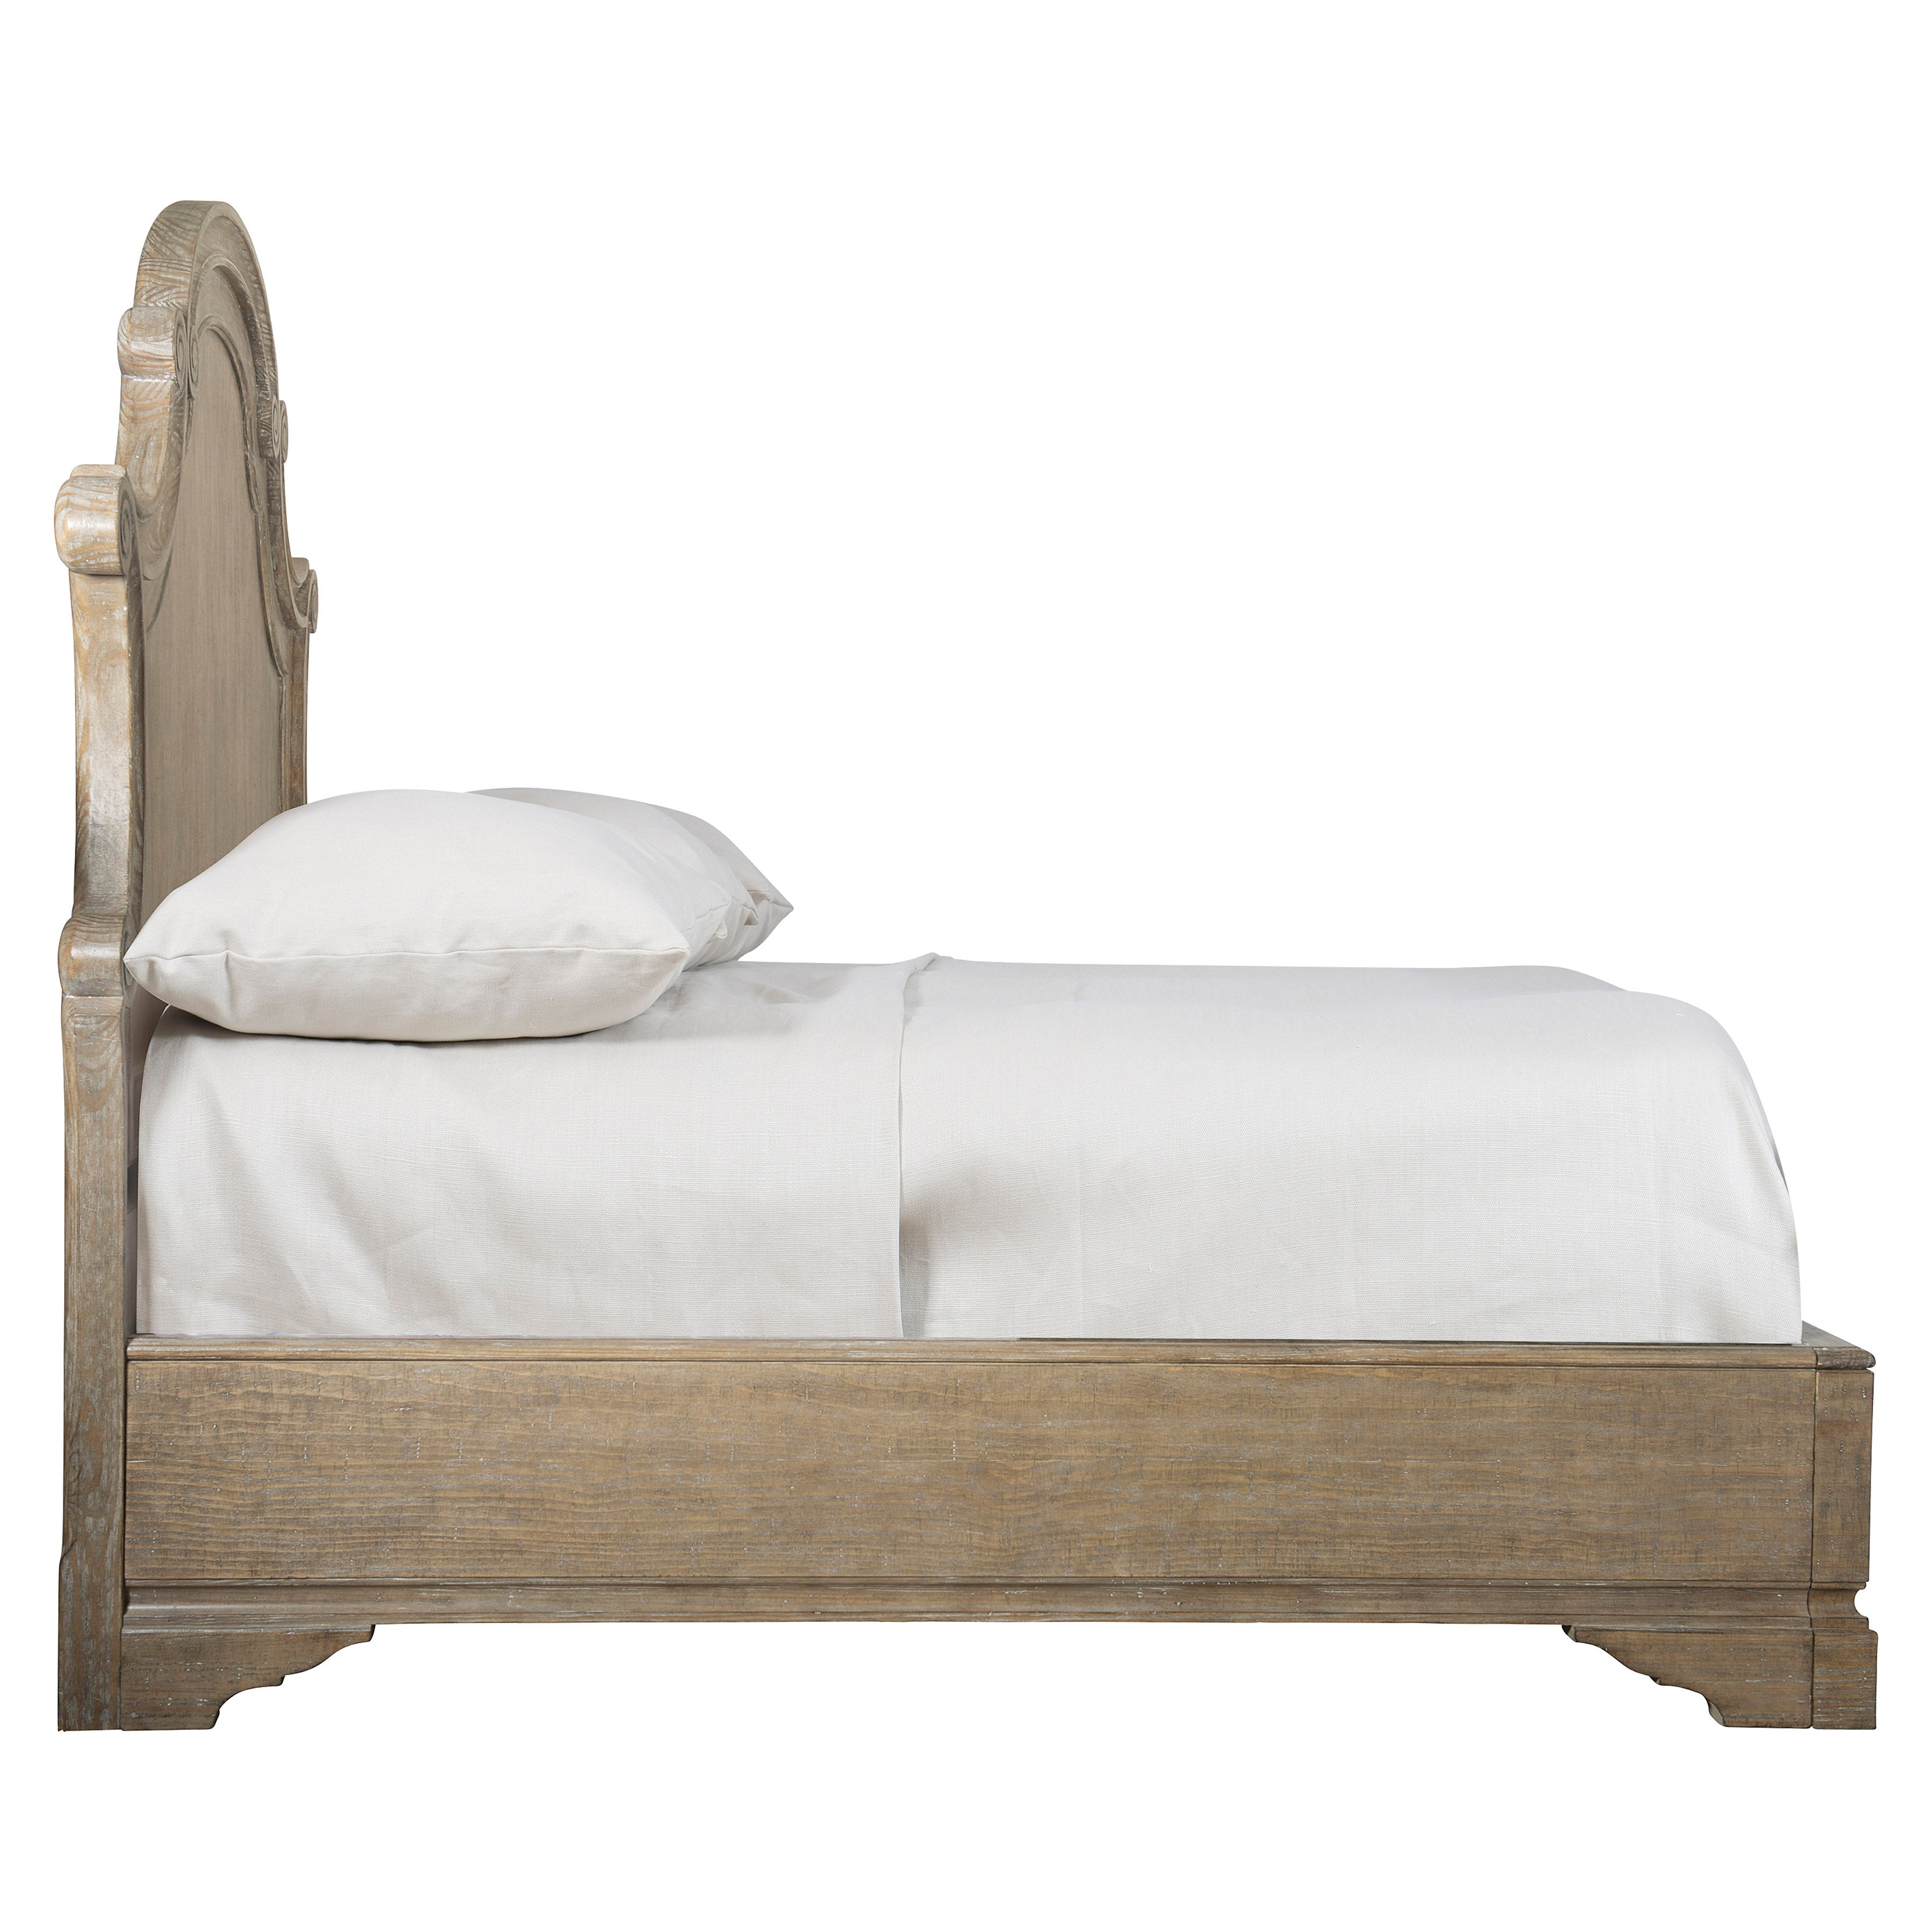 Villa Toscana Wooden California King Panel Bed